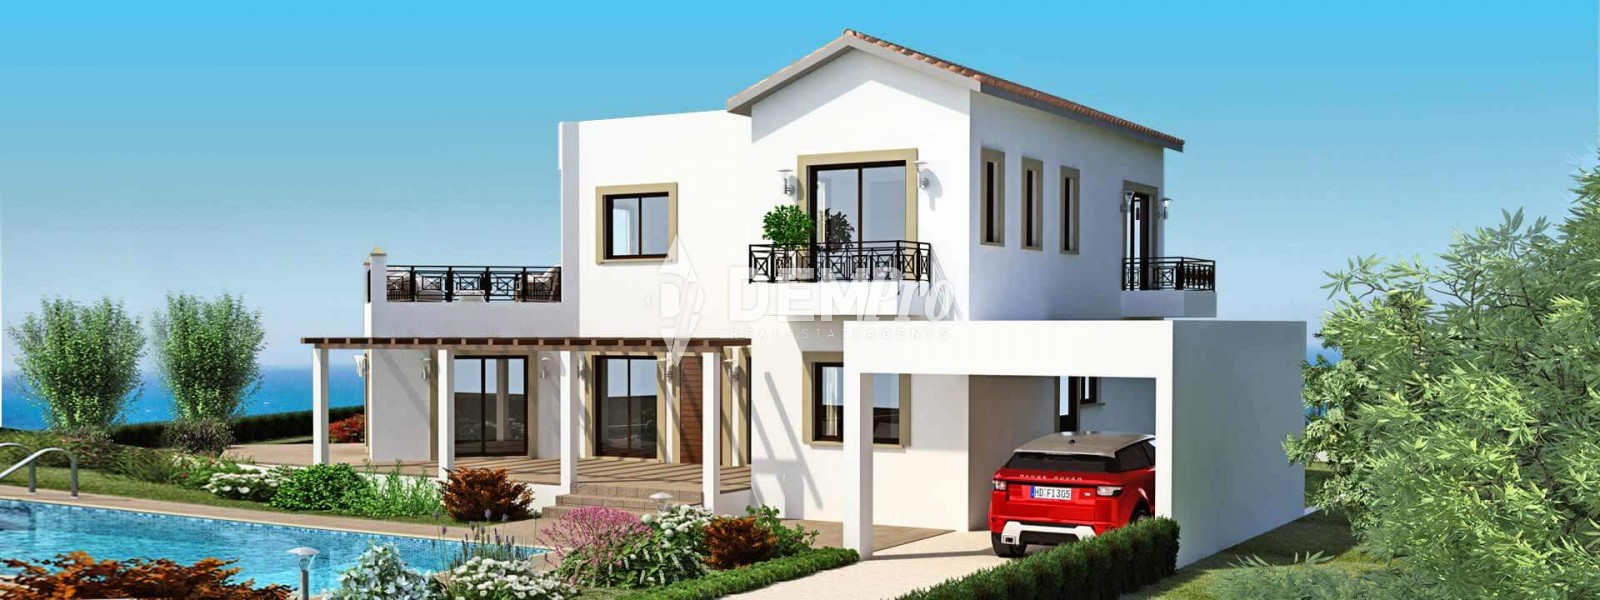 Villa For Sale in Kouklia, Paphos - AD1737